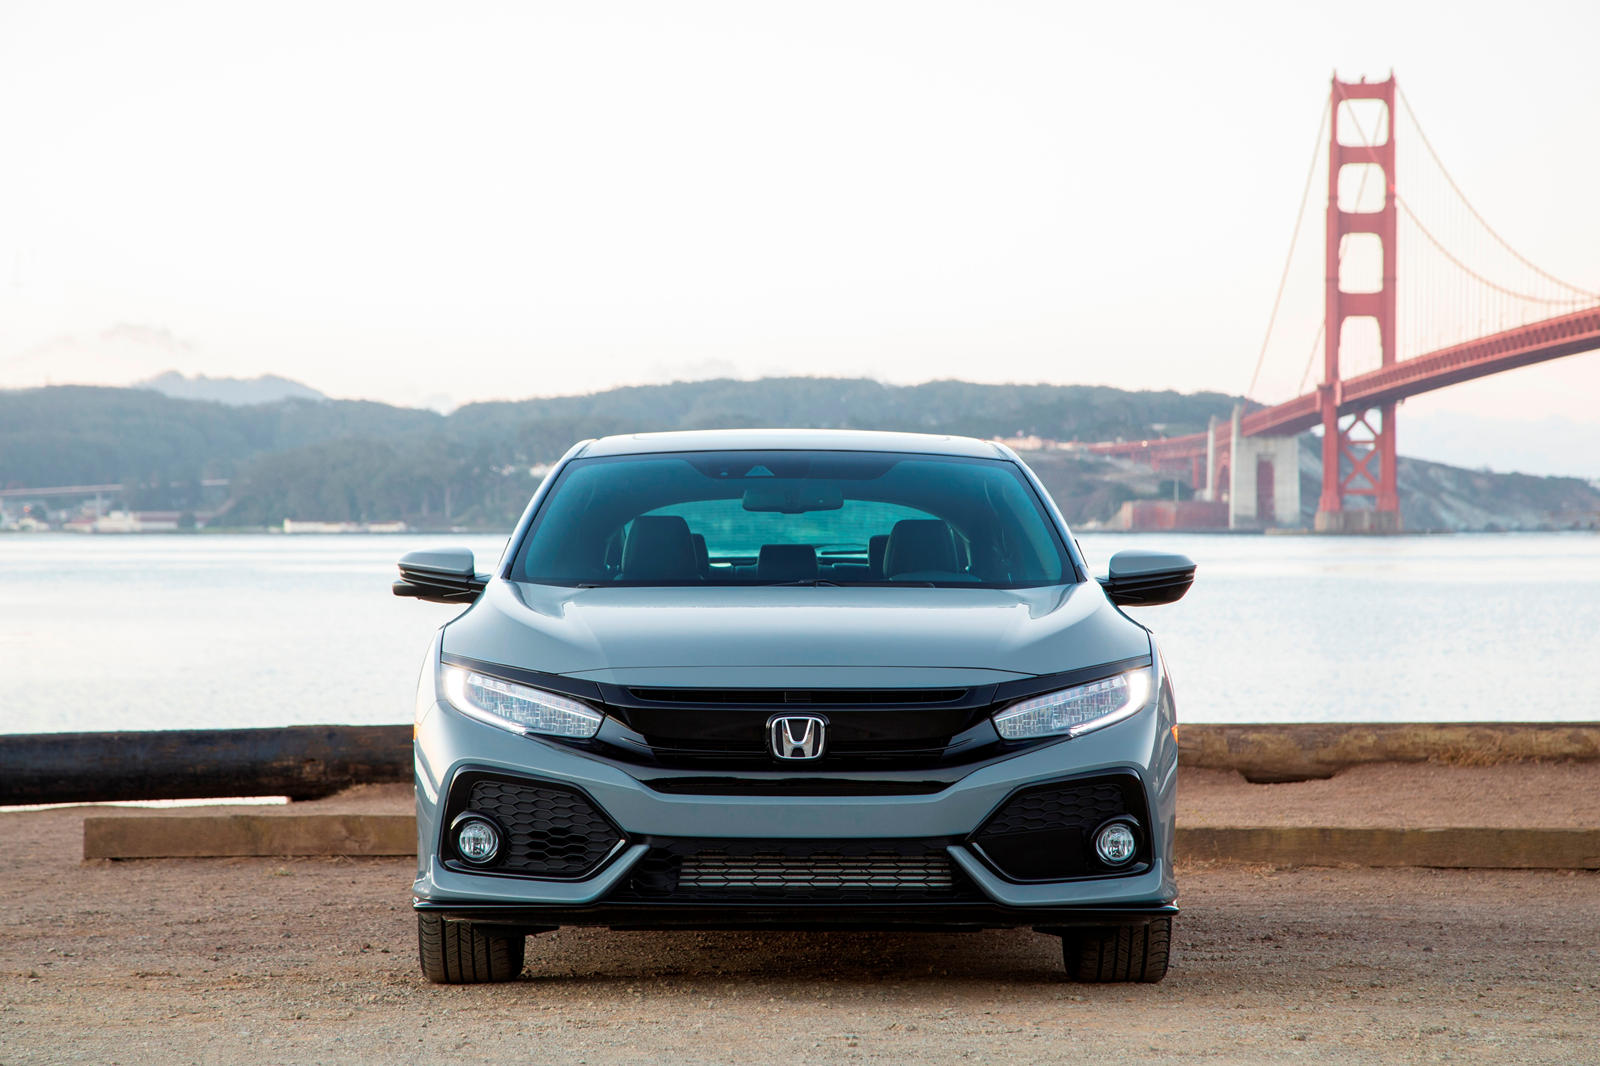 2019 Honda Civic Hatchback Front View